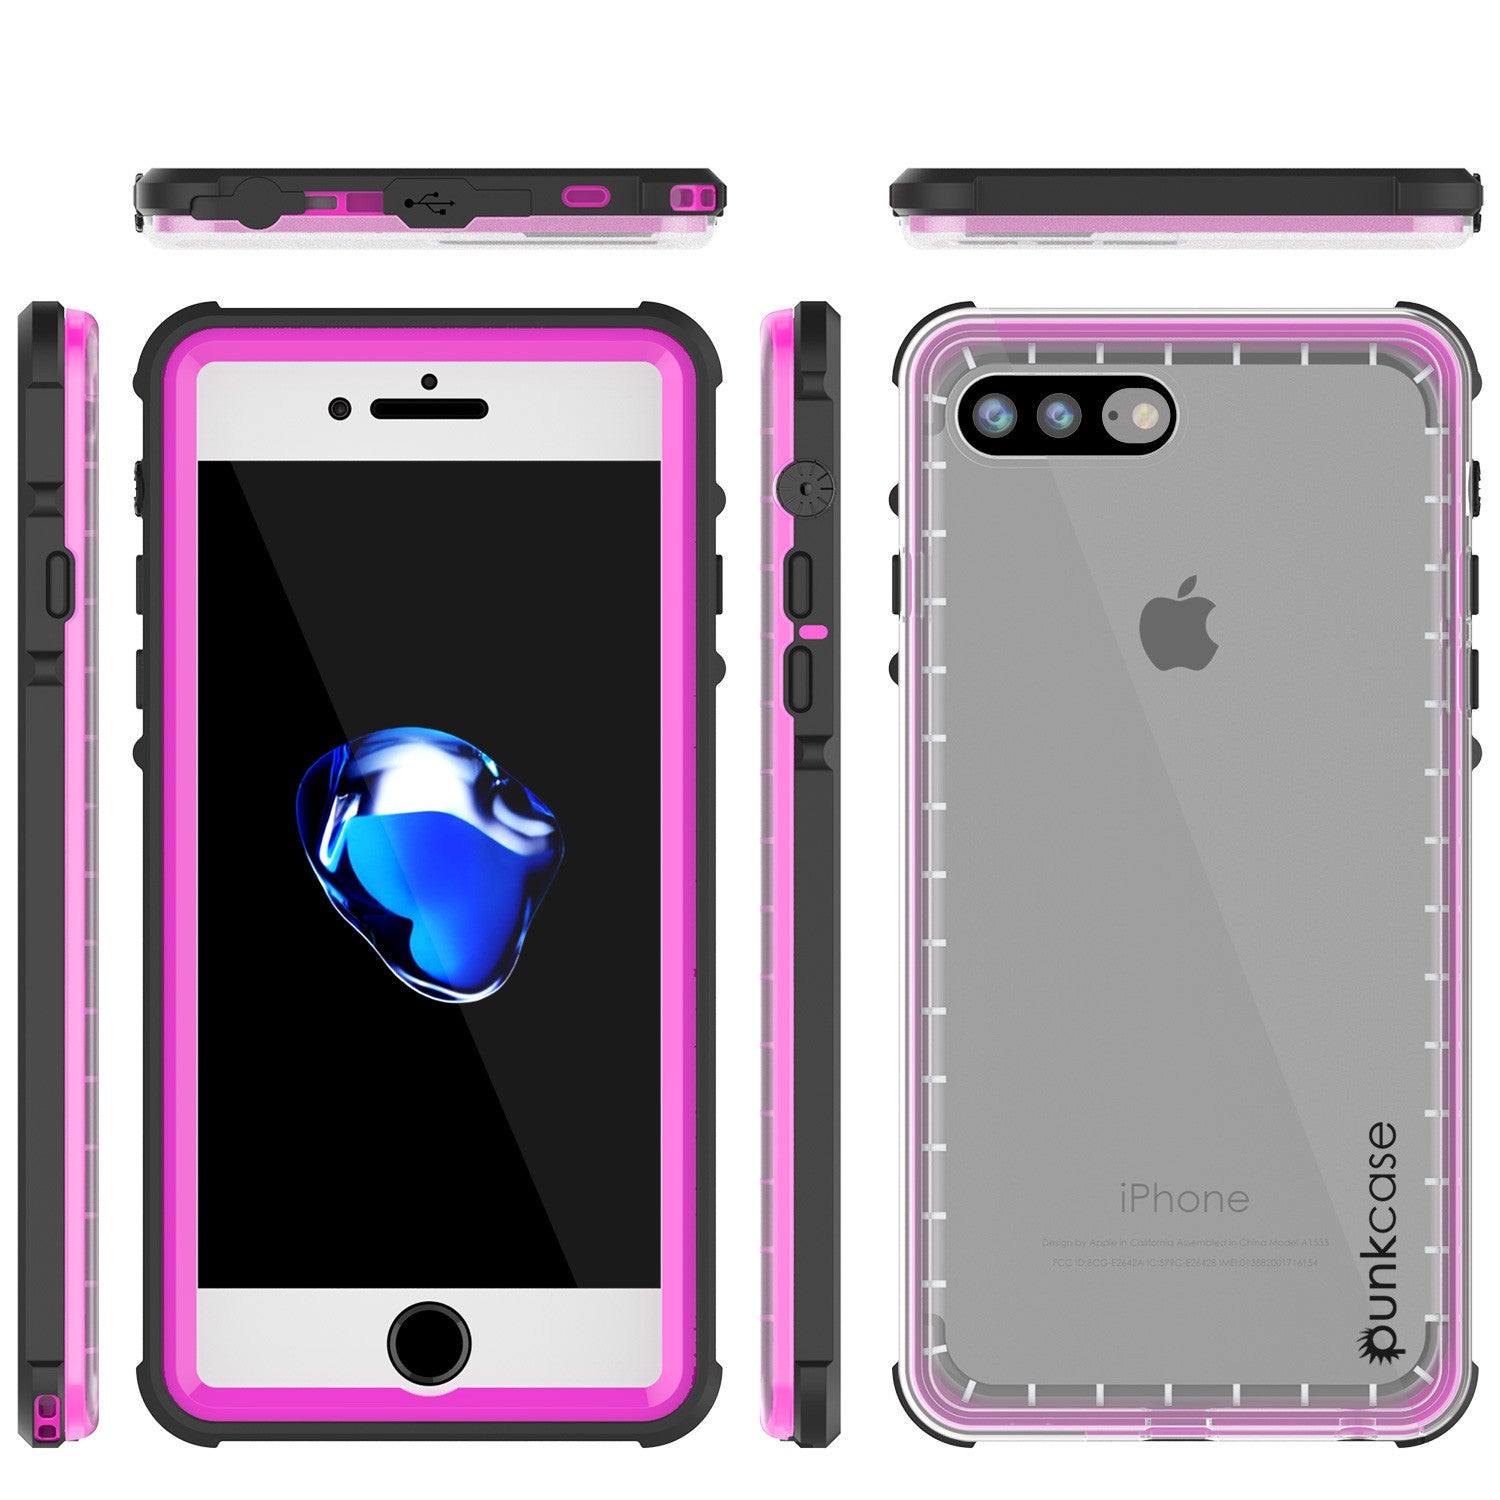 PUNKCASE - Crystal Series Waterproof Case for Apple IPhone 7+ Plus | Pink